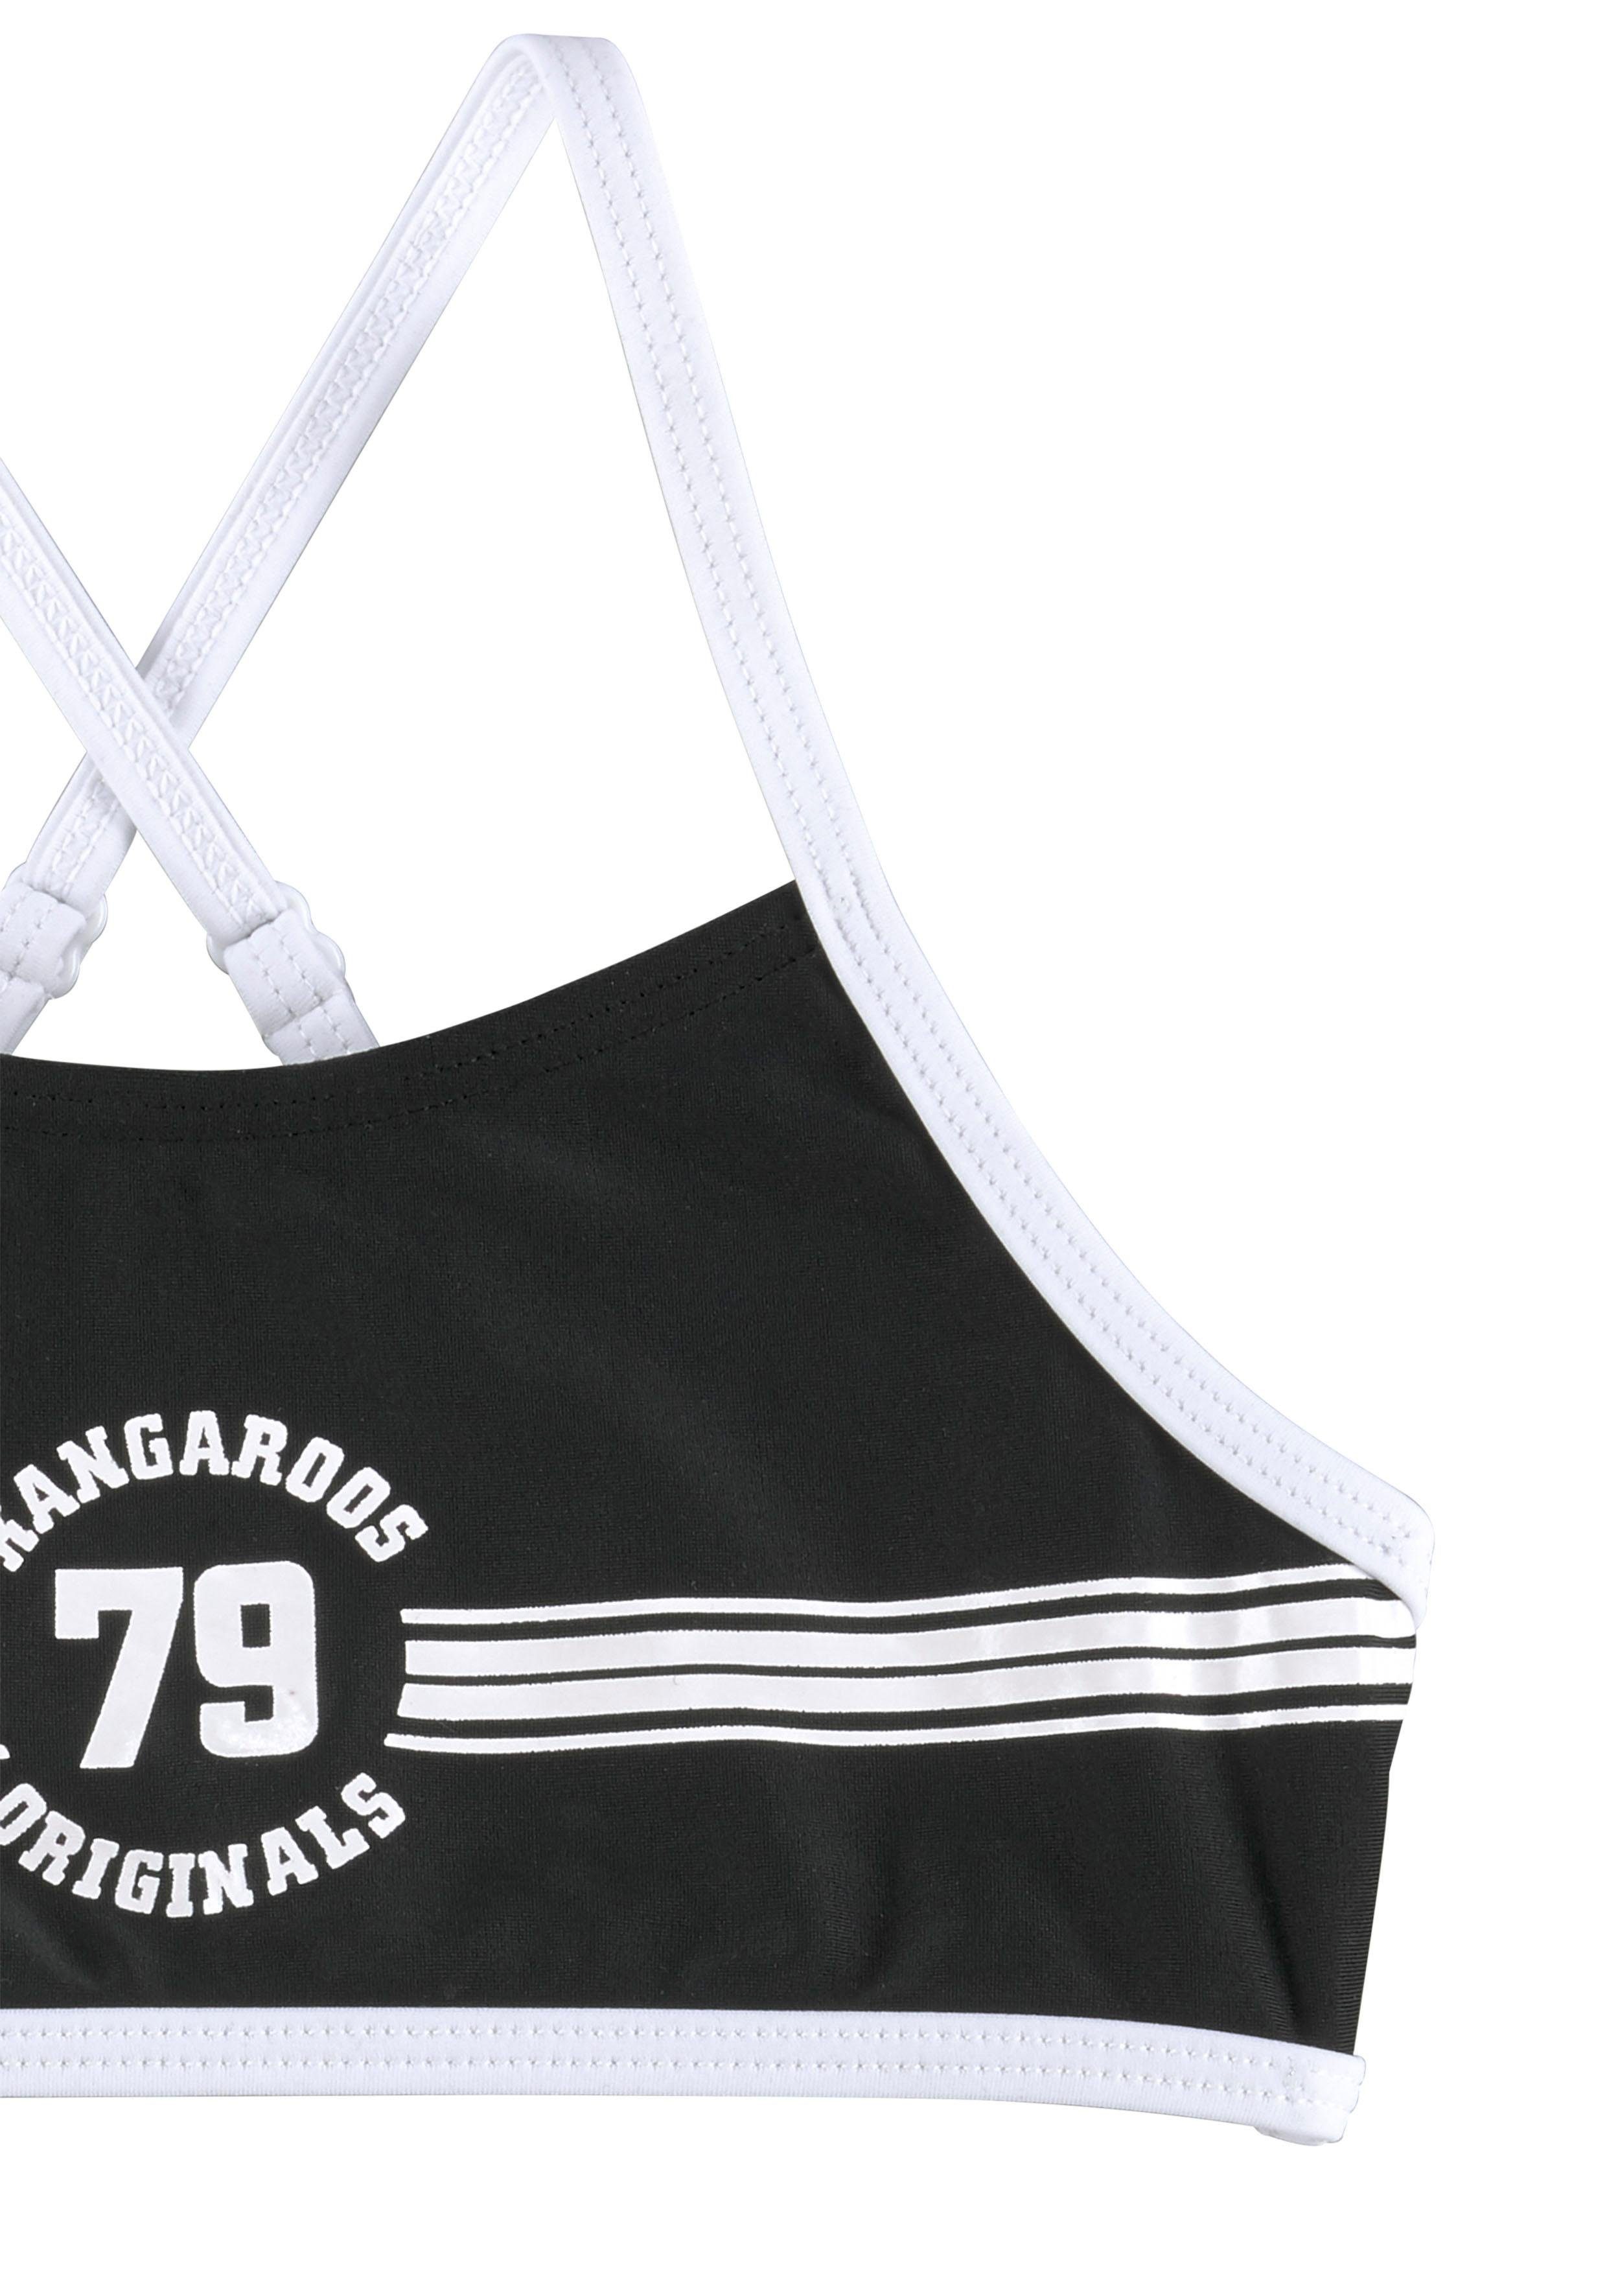 KangaROOS Bustier-Bikini Sporty sportlichem Frontdruck mit schwarz